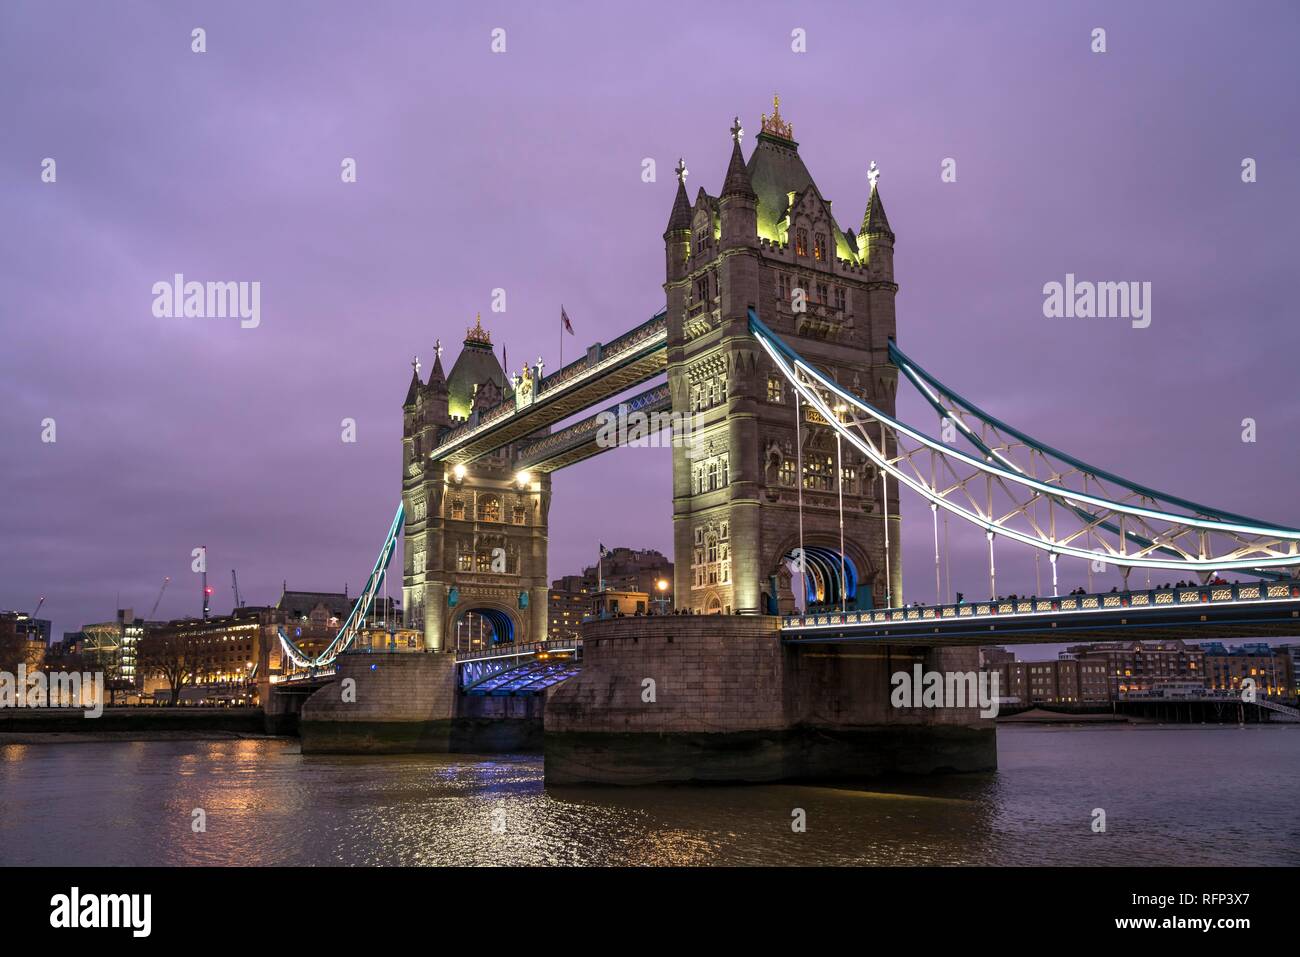 Illuminated Tower Bridge at dusk, London, Great Britain Stock Photo